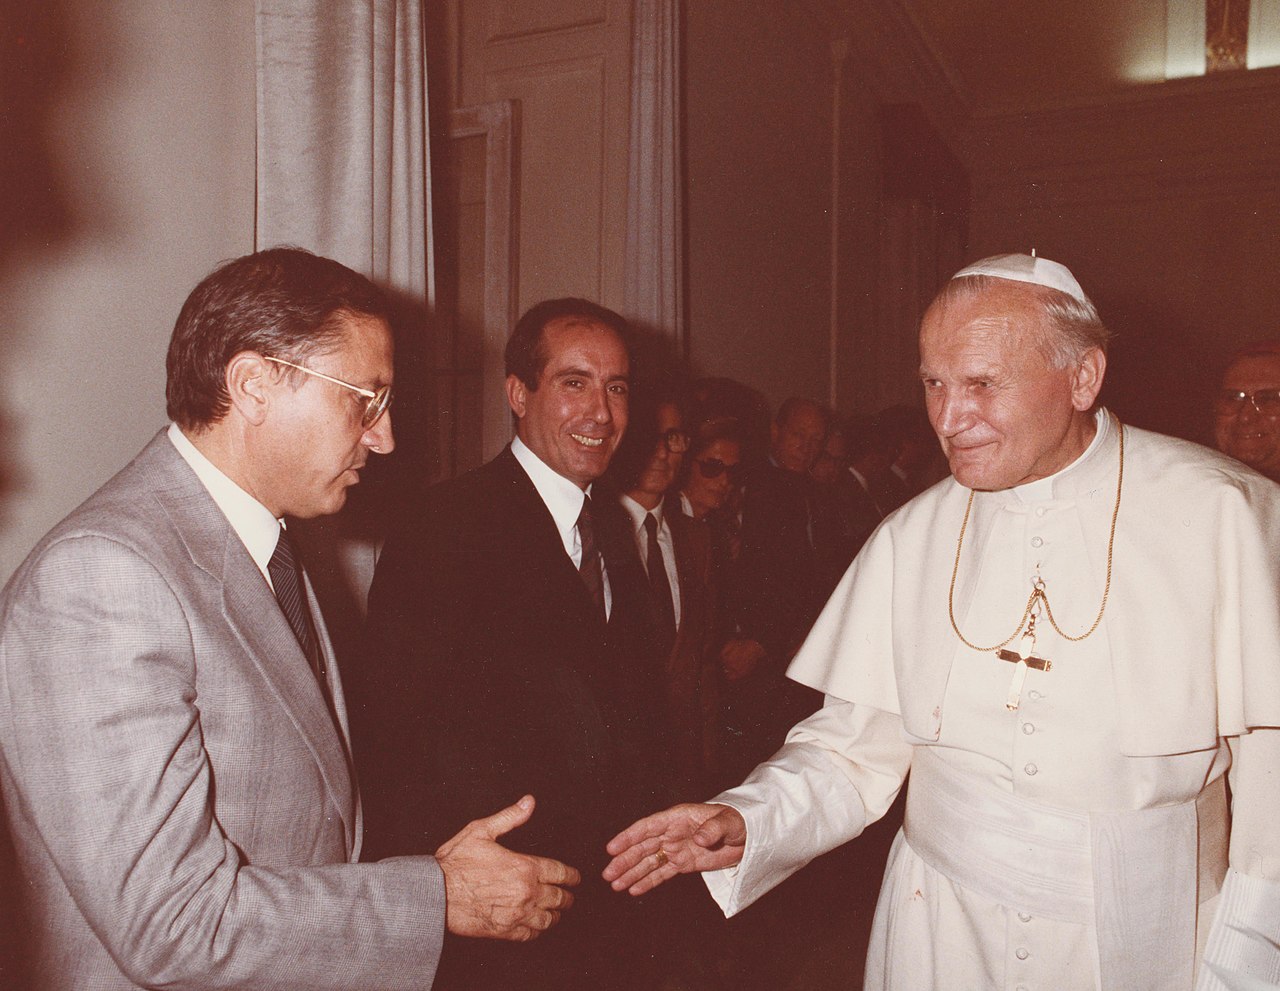 Papa Giovanni Paolo II - Wikipedia